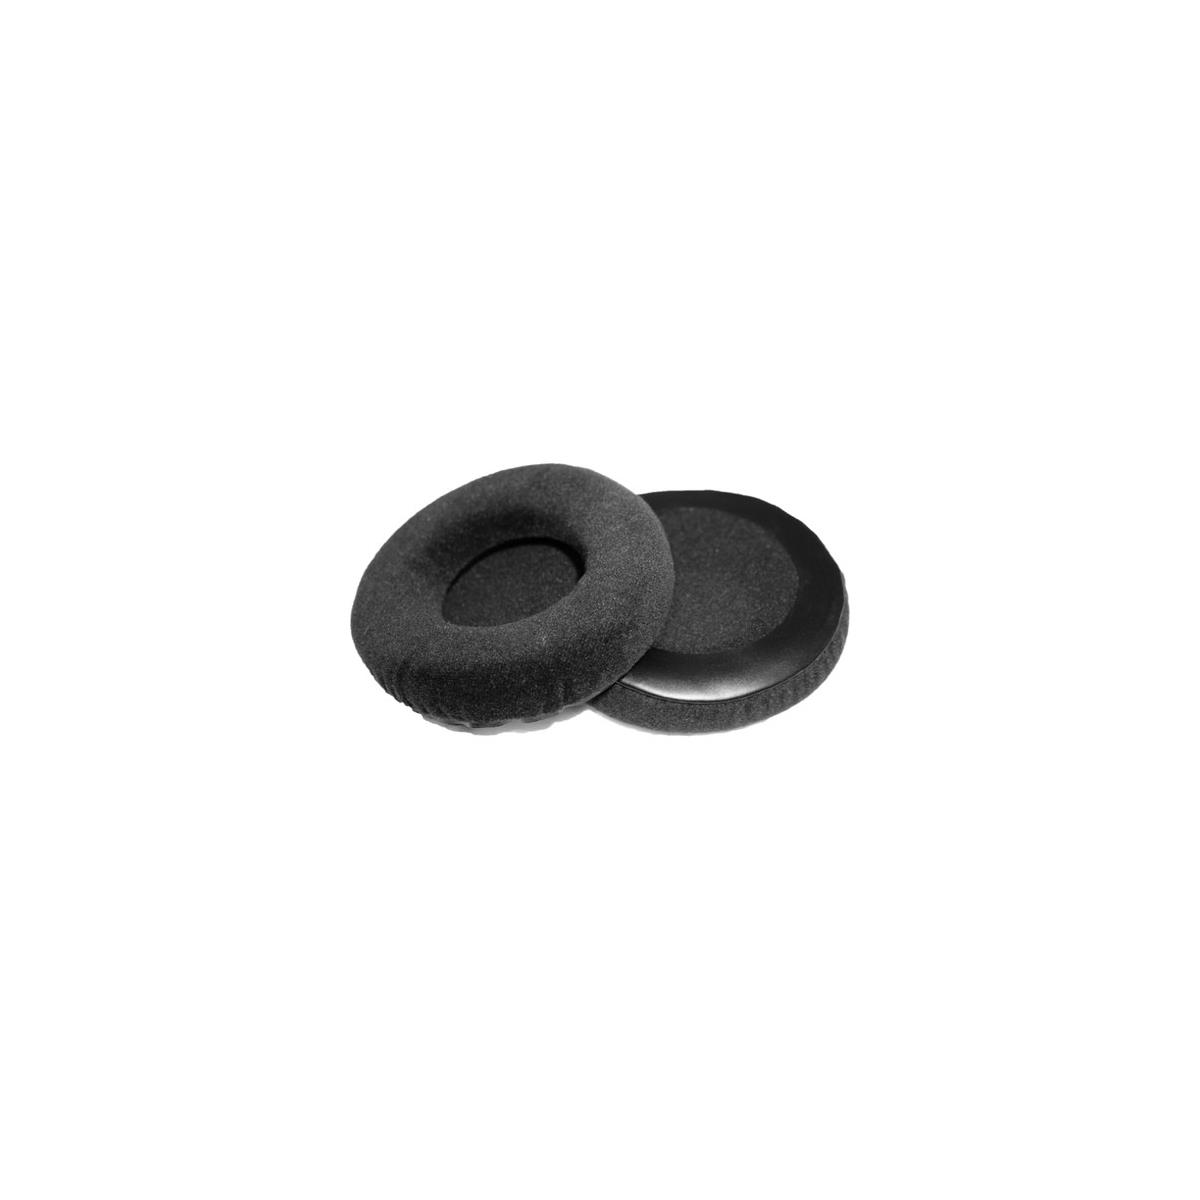 Image of Dekoni Audio Velour Replacement Ear Pads for Pioneer HDJ-2000 MKII Headphones